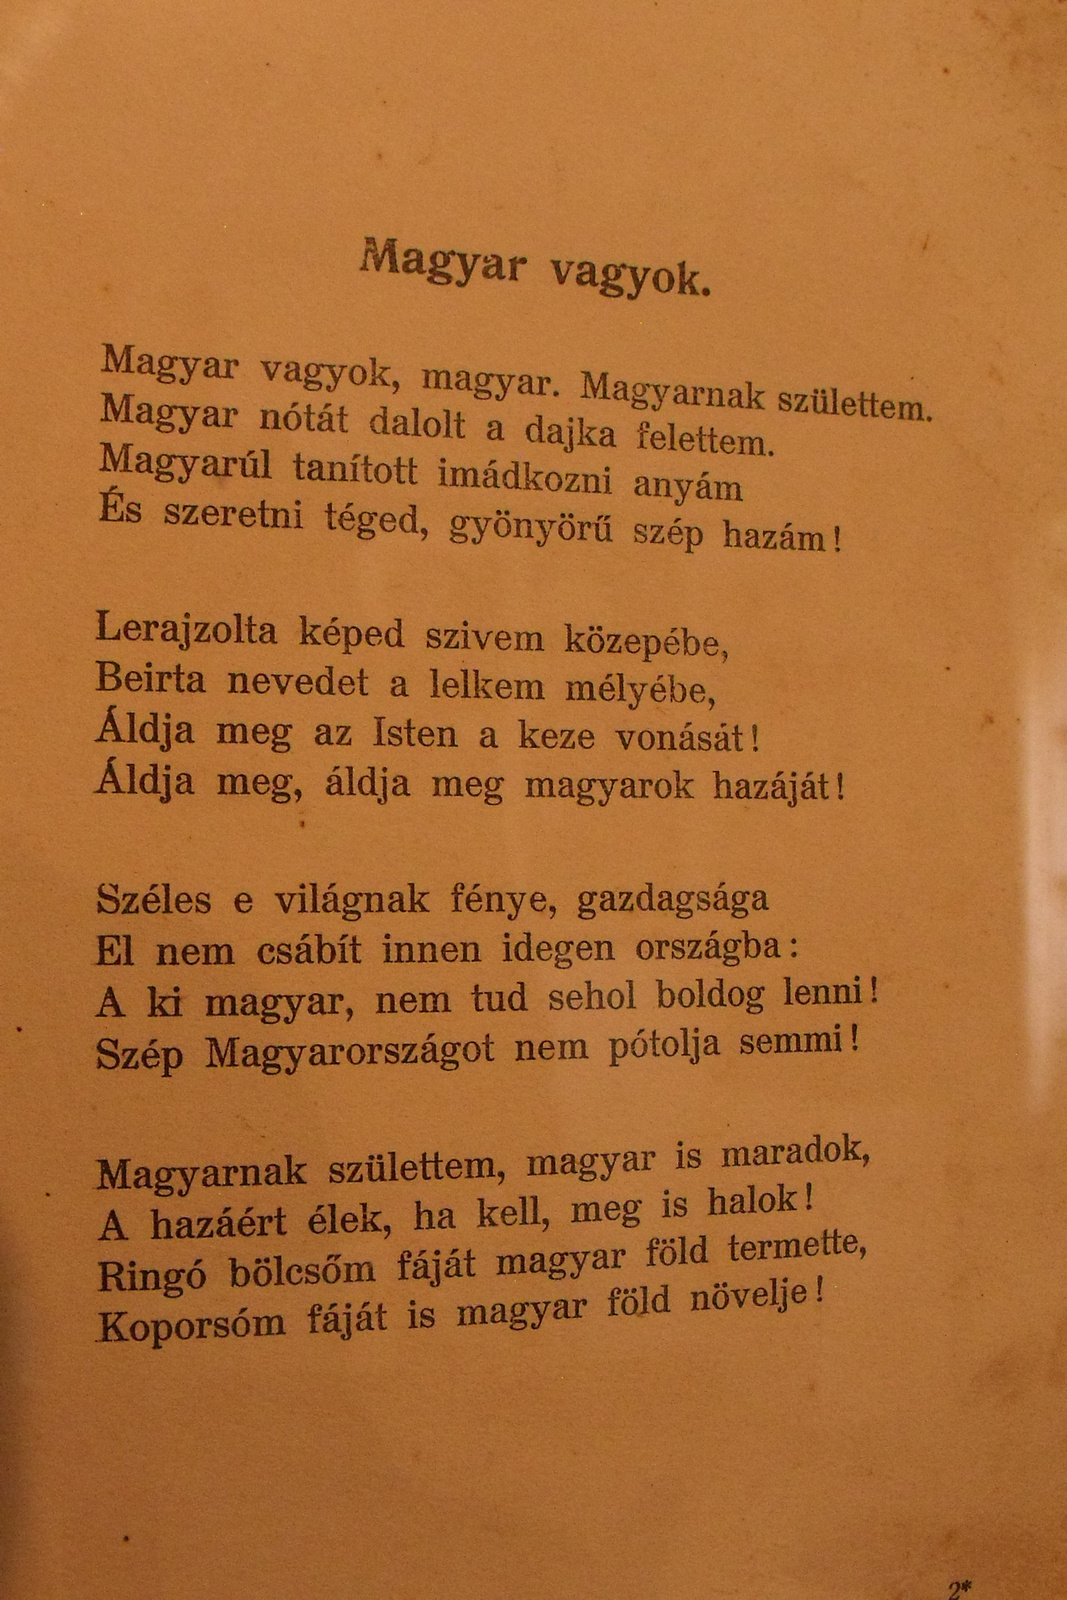 DSCF0215 Magyar vagyok, vers